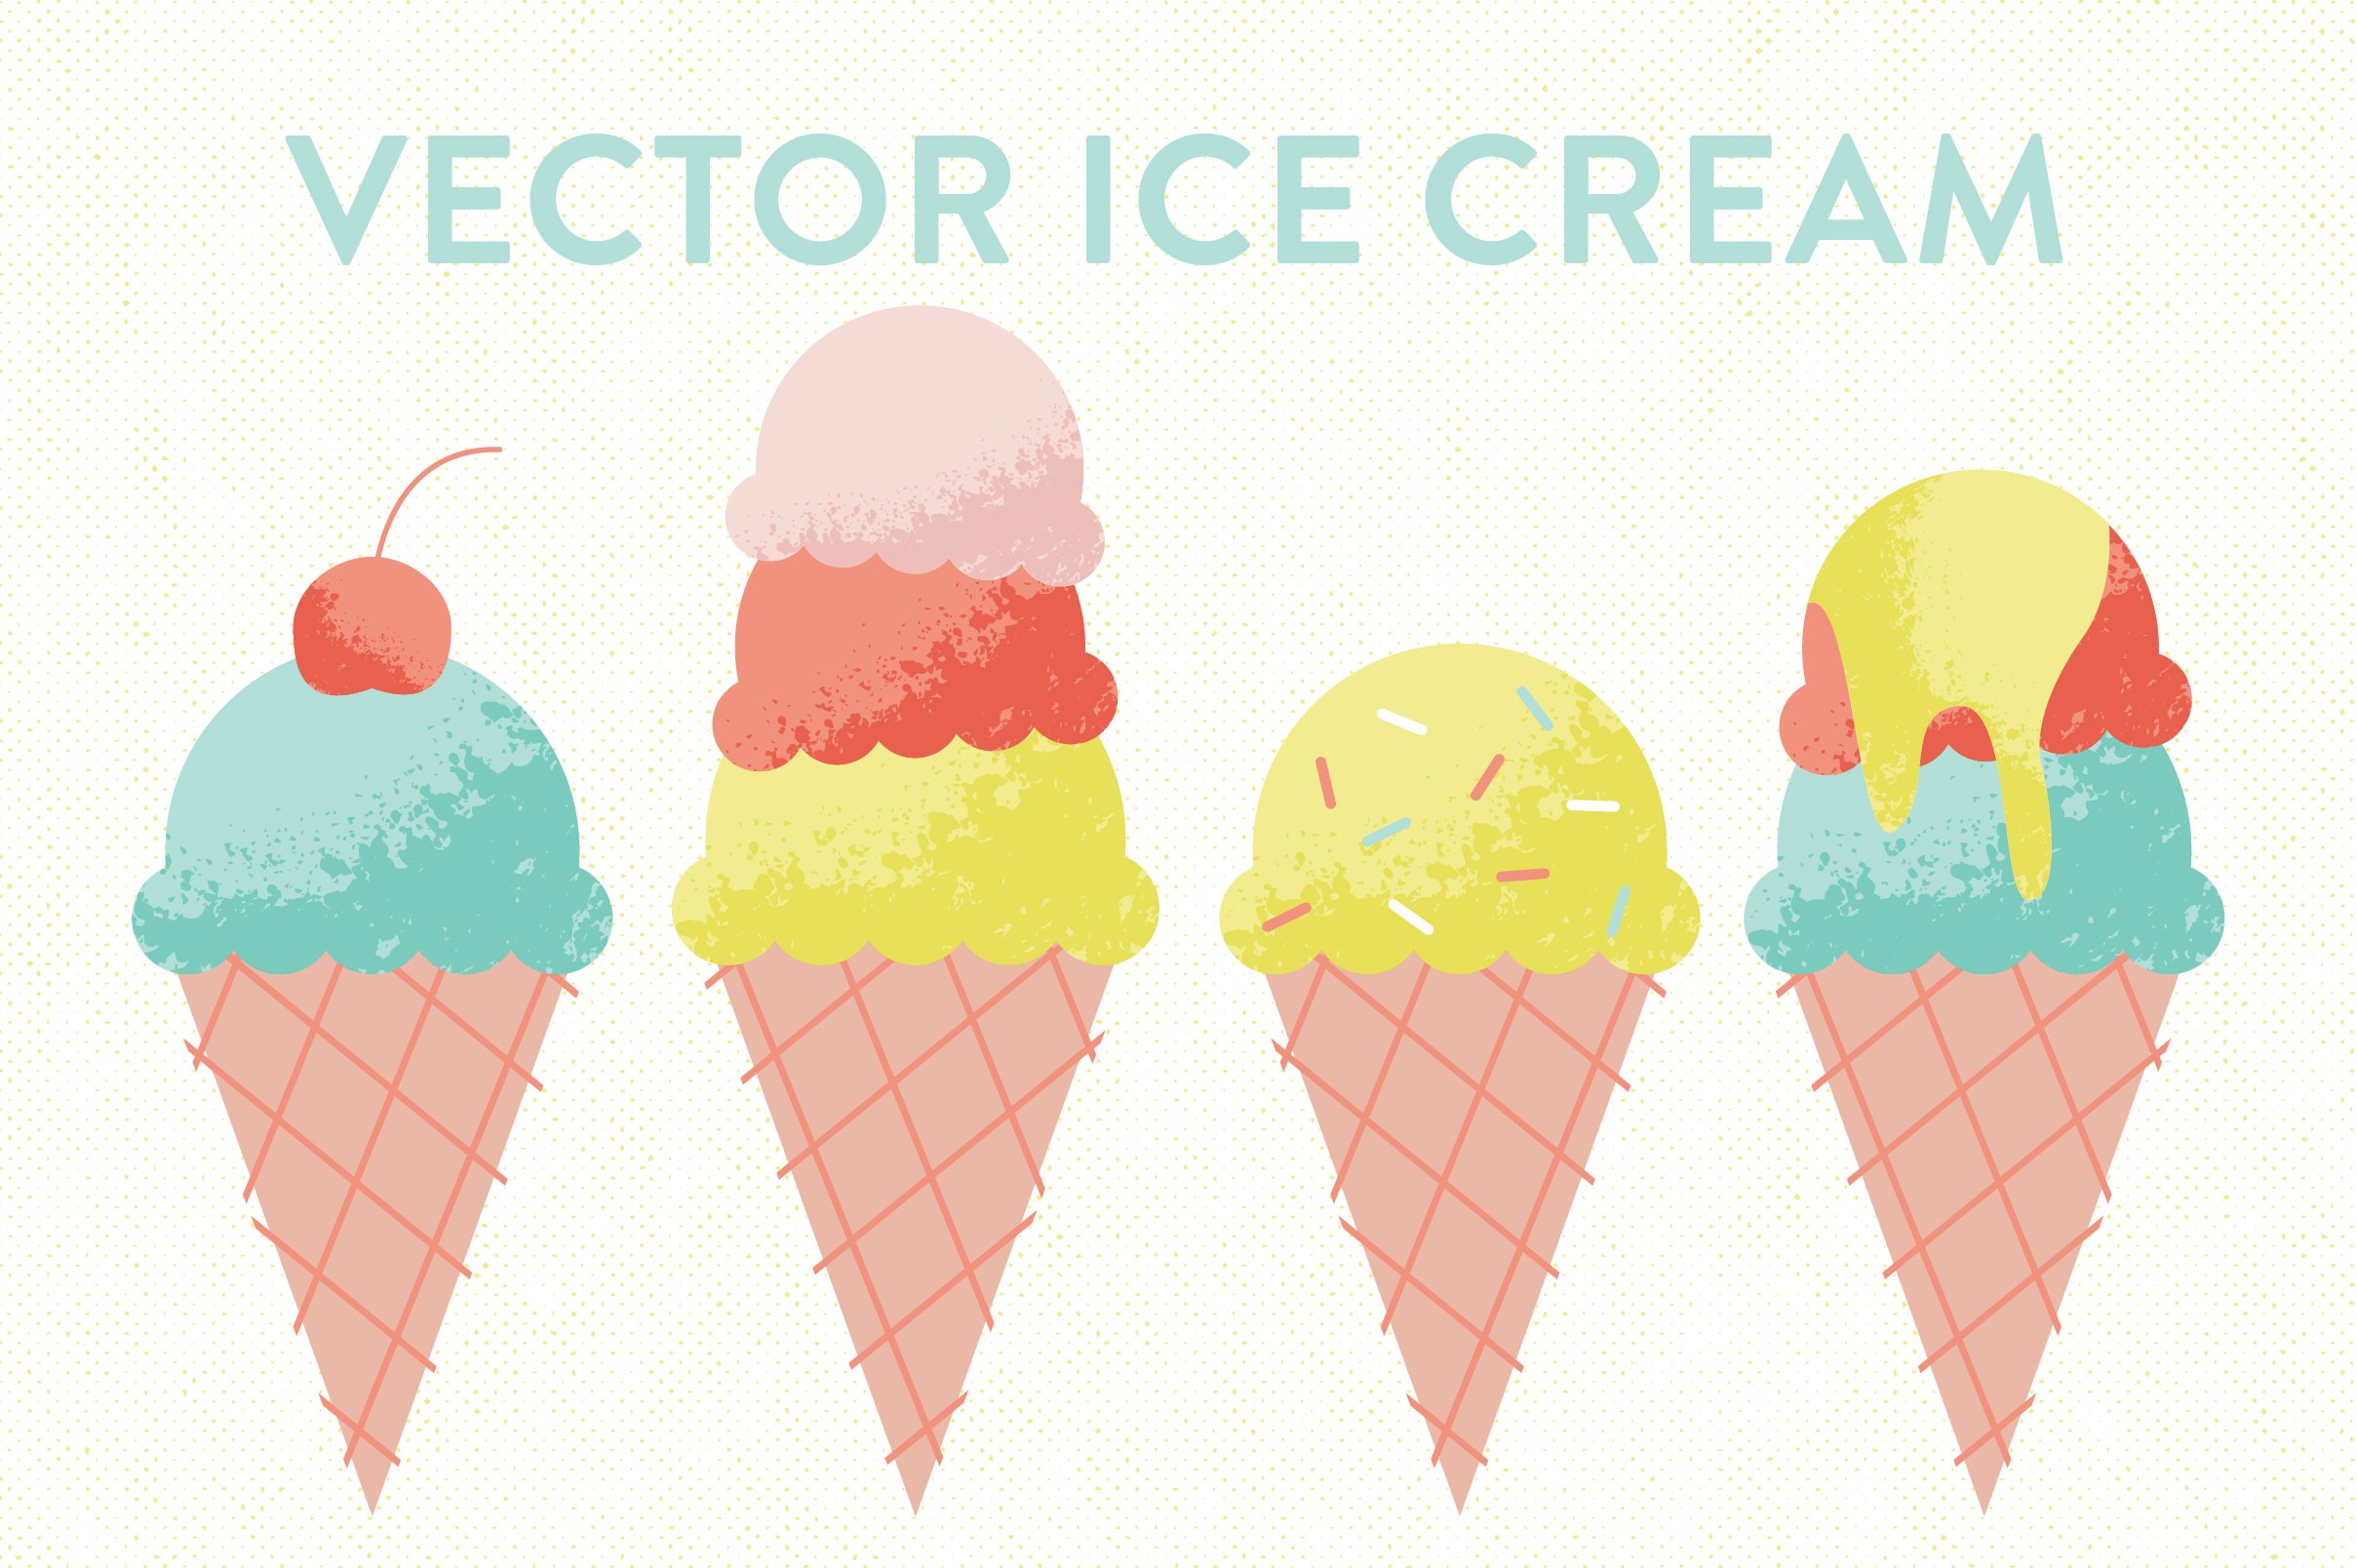 Vector Ice Cream Cones cover image.